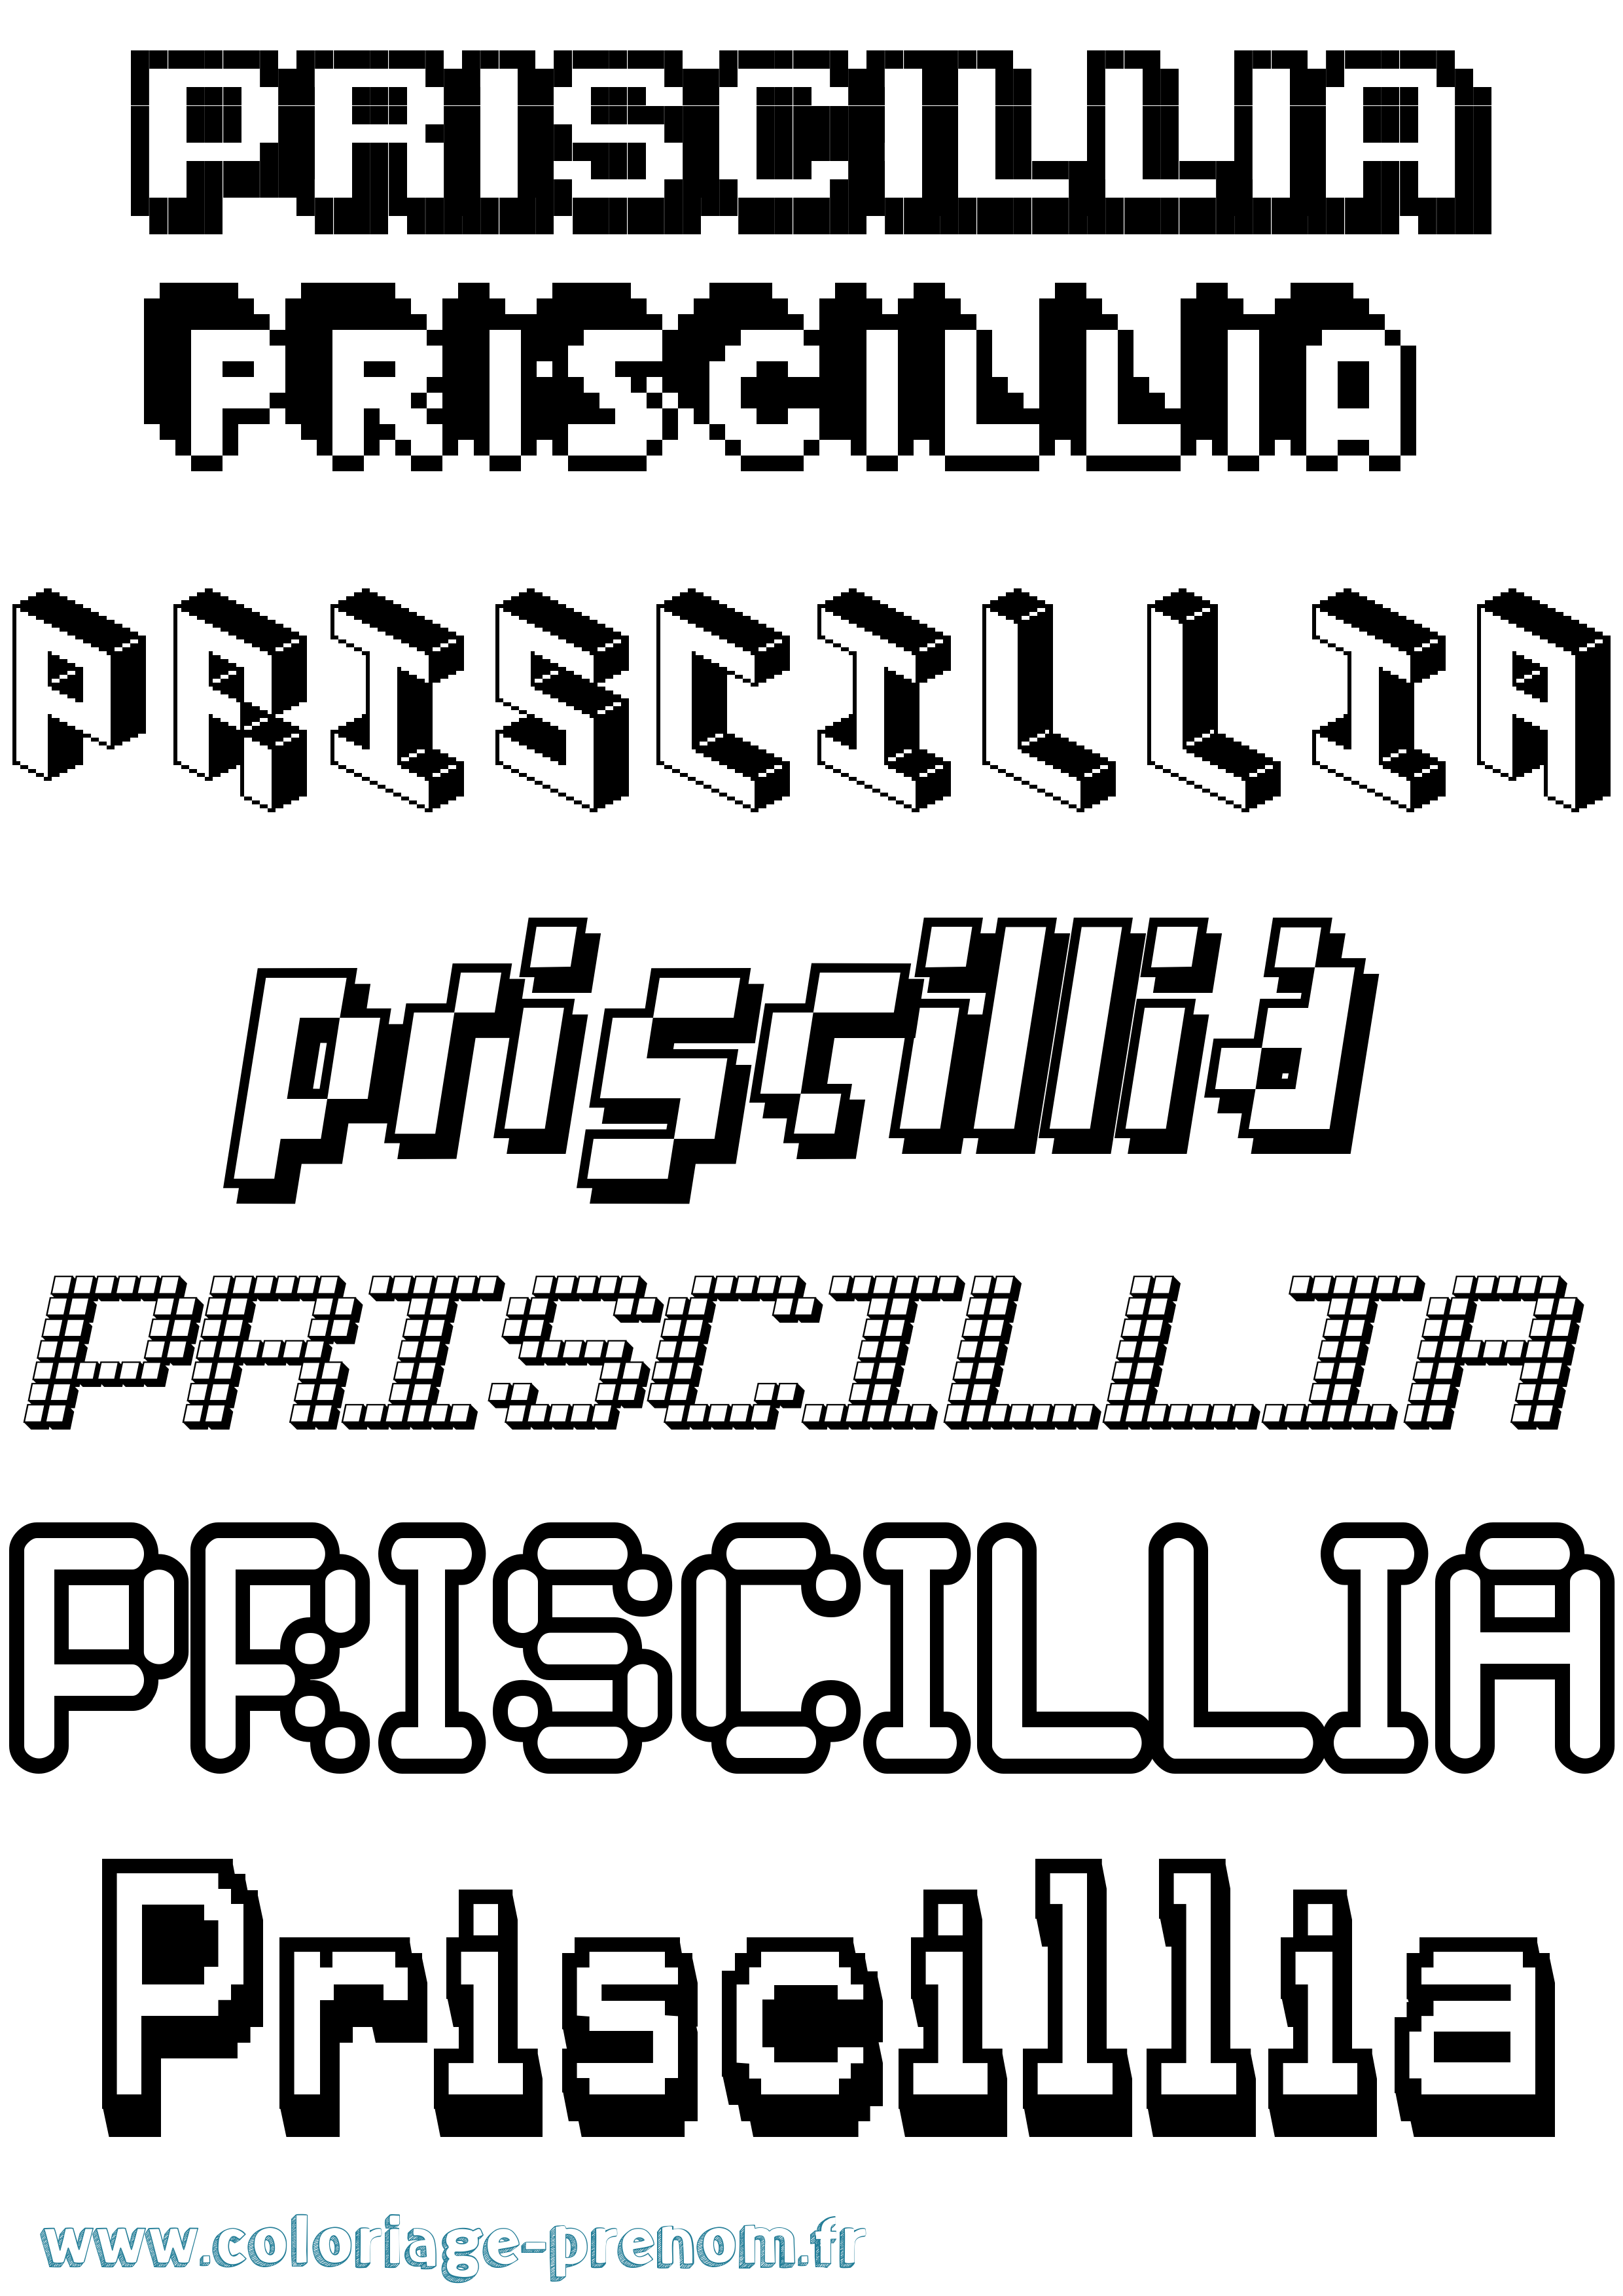 Coloriage prénom Priscillia Pixel